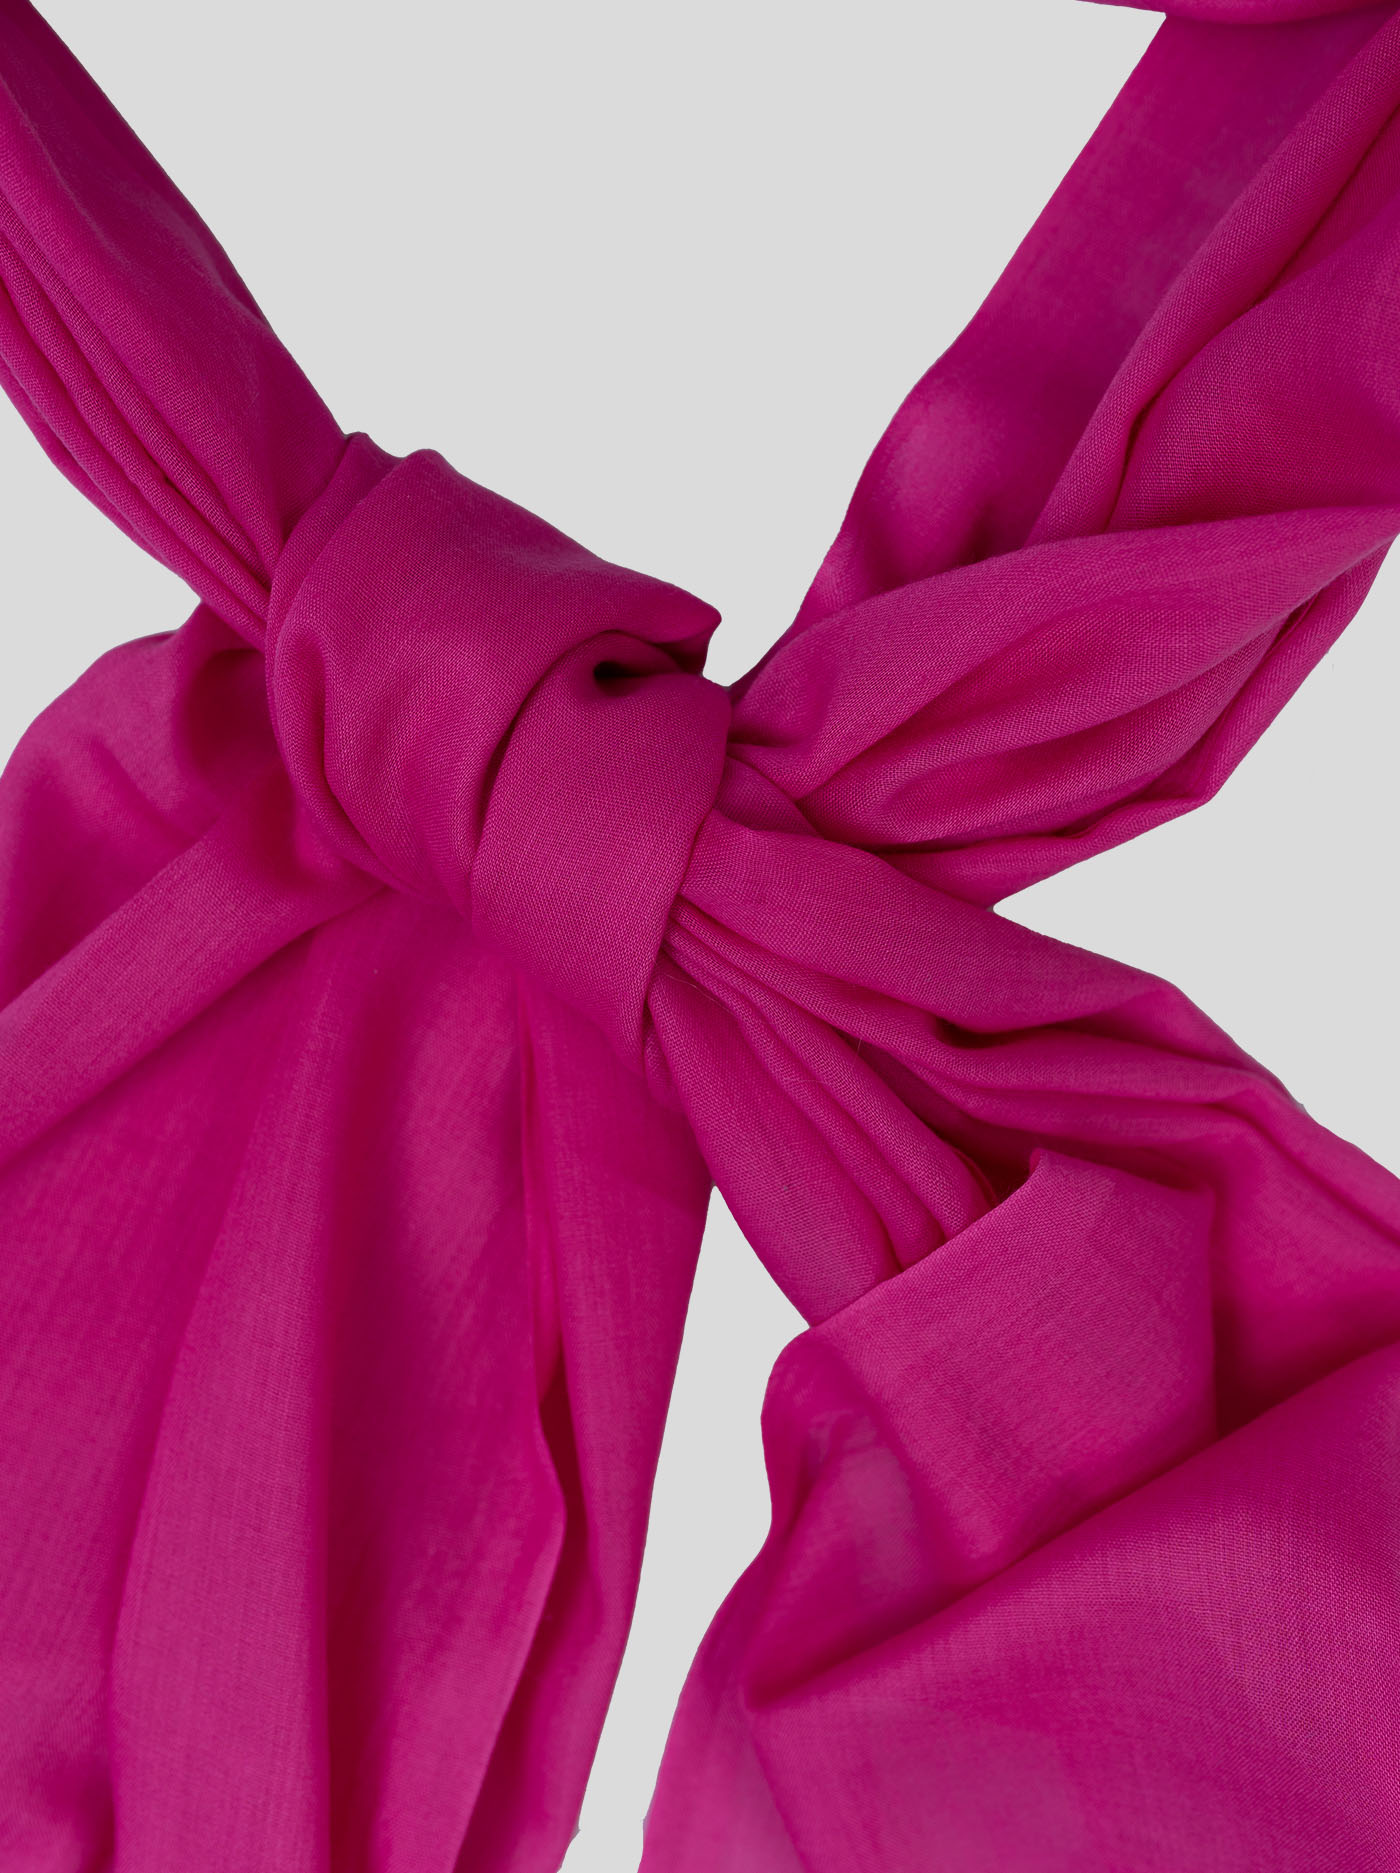 Pink scarf image 3